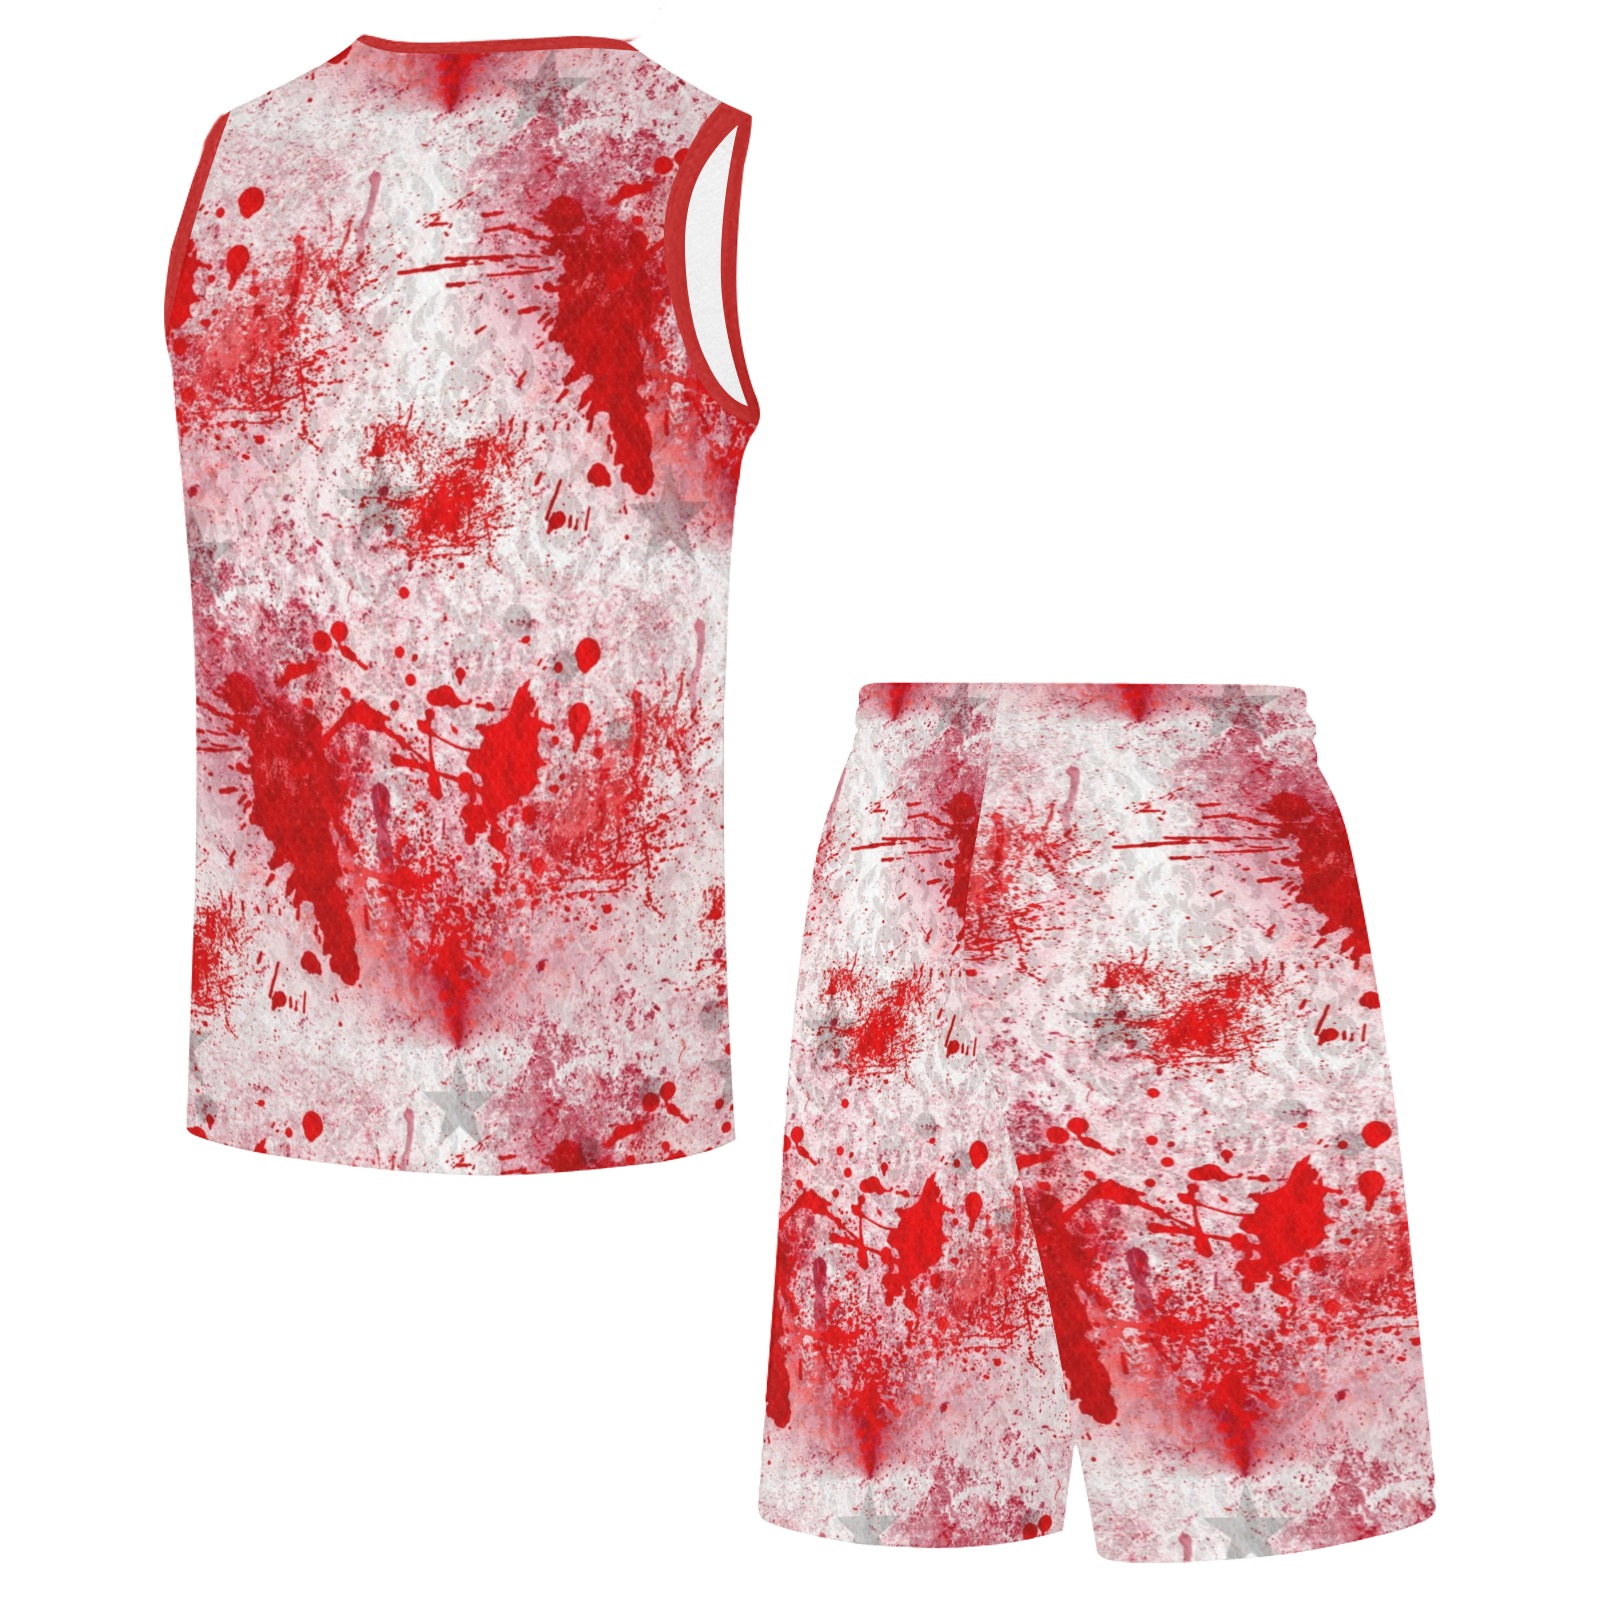 Halloween Blood by Artdream All Over Print Basketball Uniform